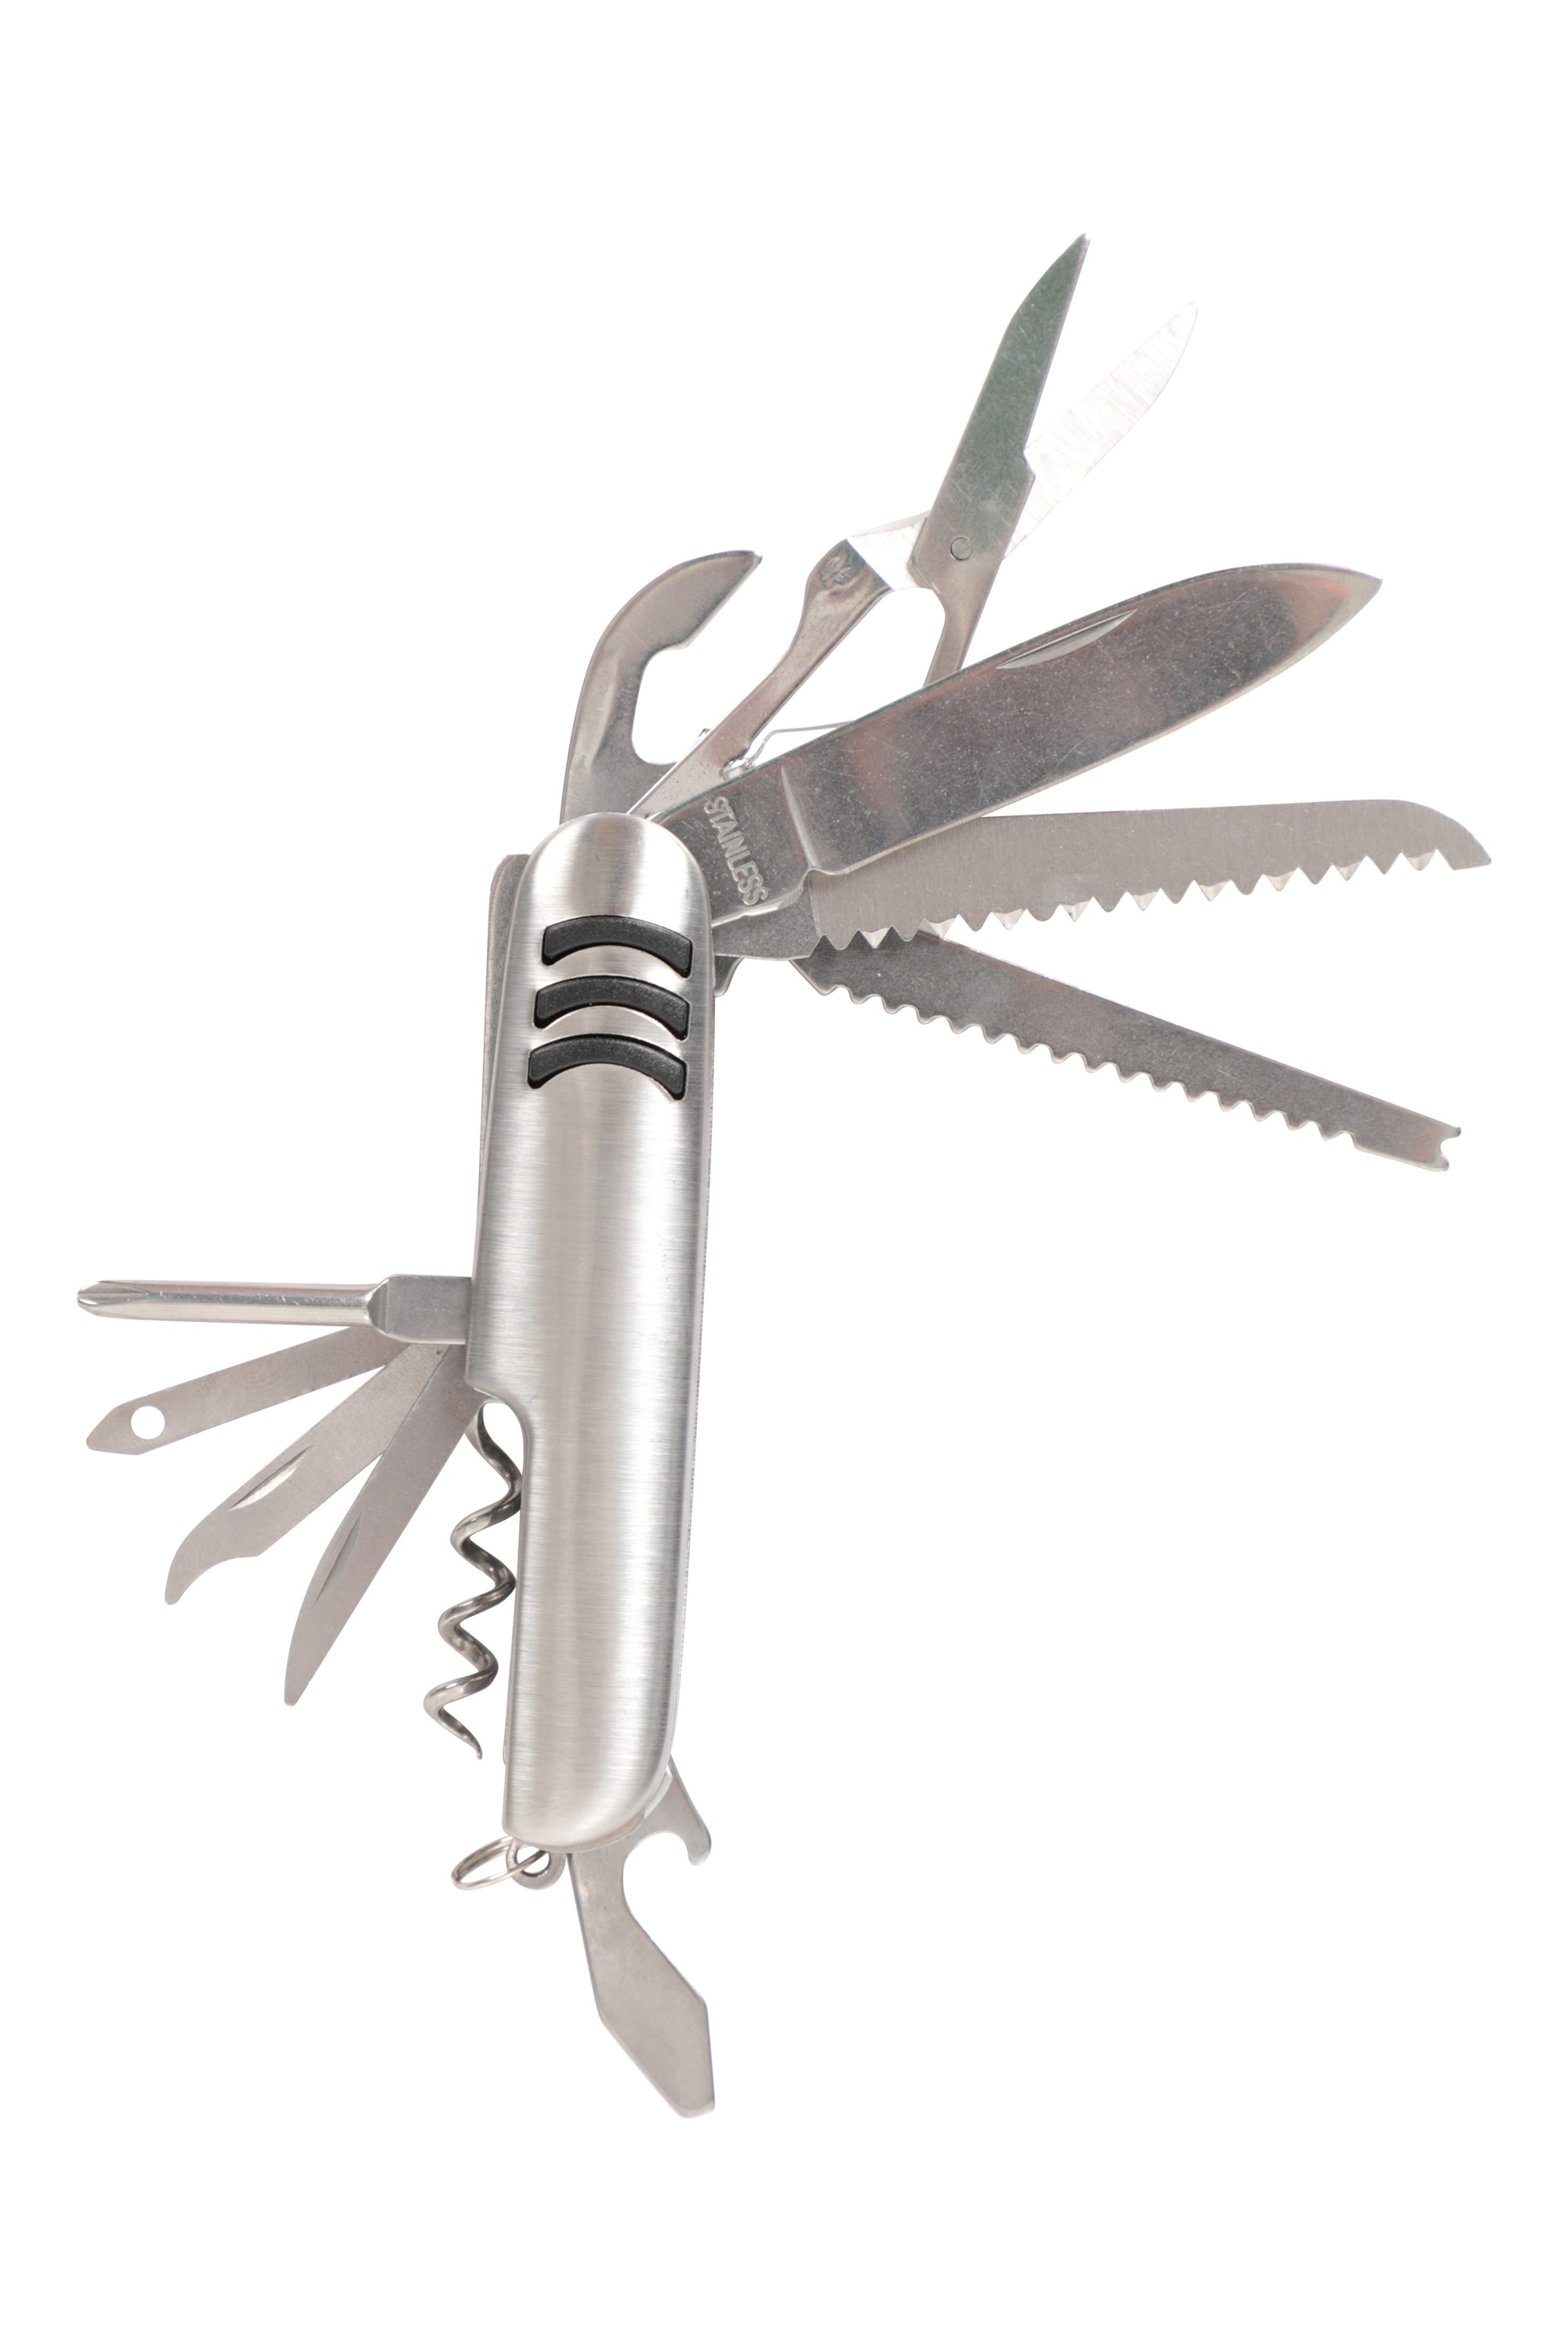 Penknife - 15 in 1 - Silver